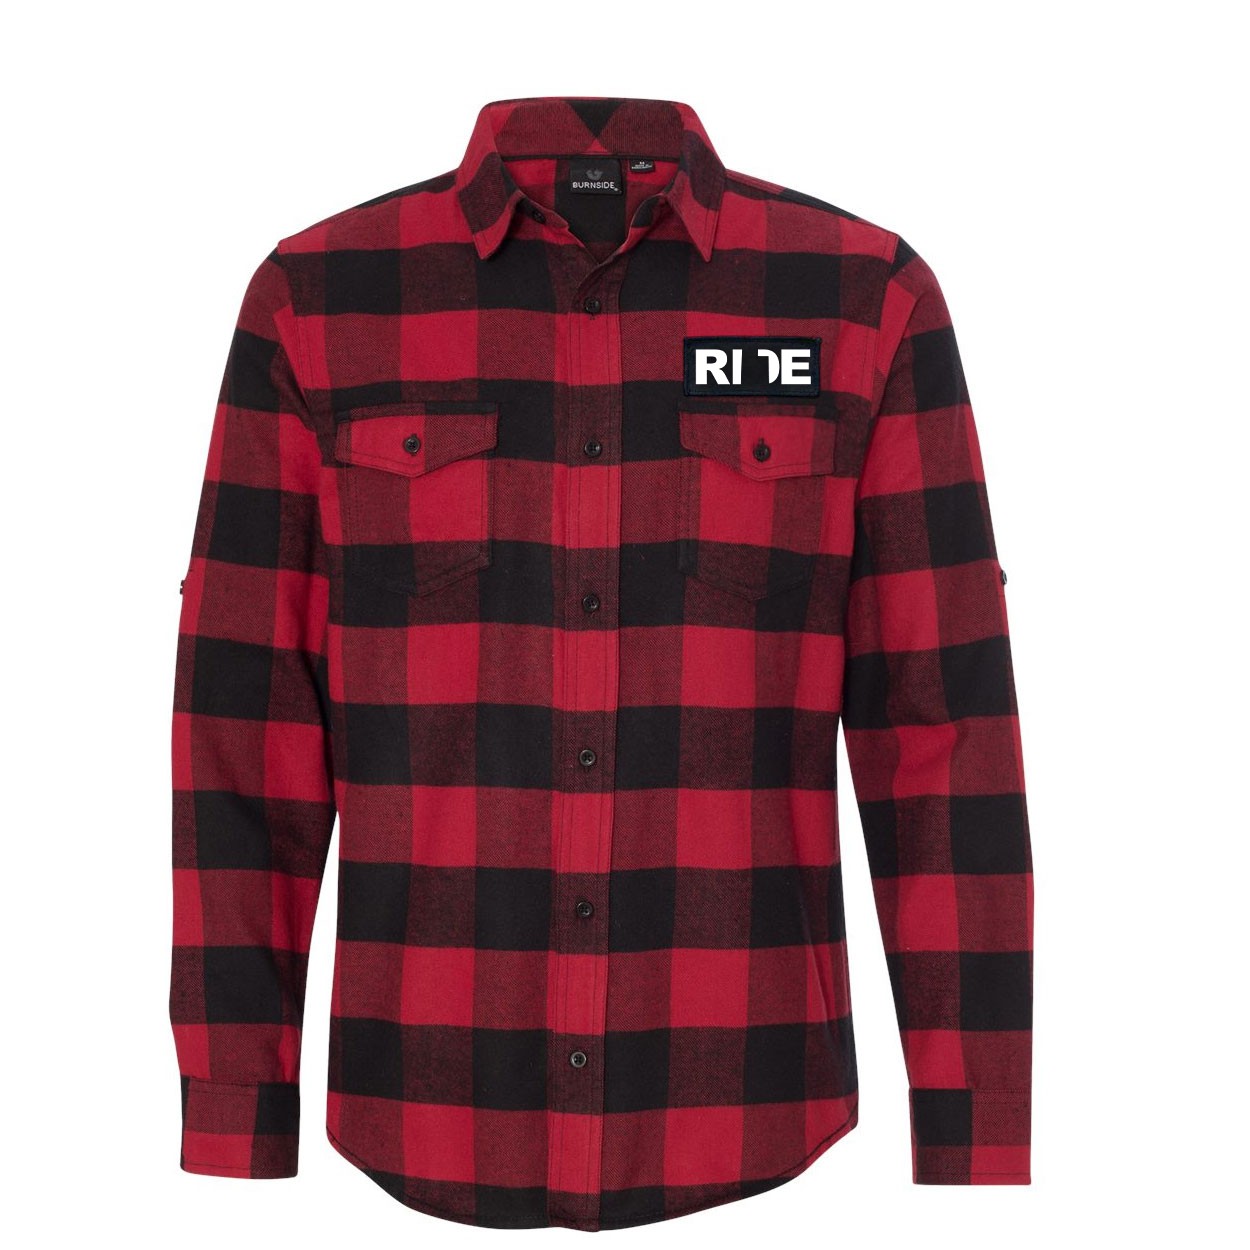 Ride Utah Classic Unisex Long Sleeve Woven Patch Flannel Shirt Red/Black Buffalo (White Logo)